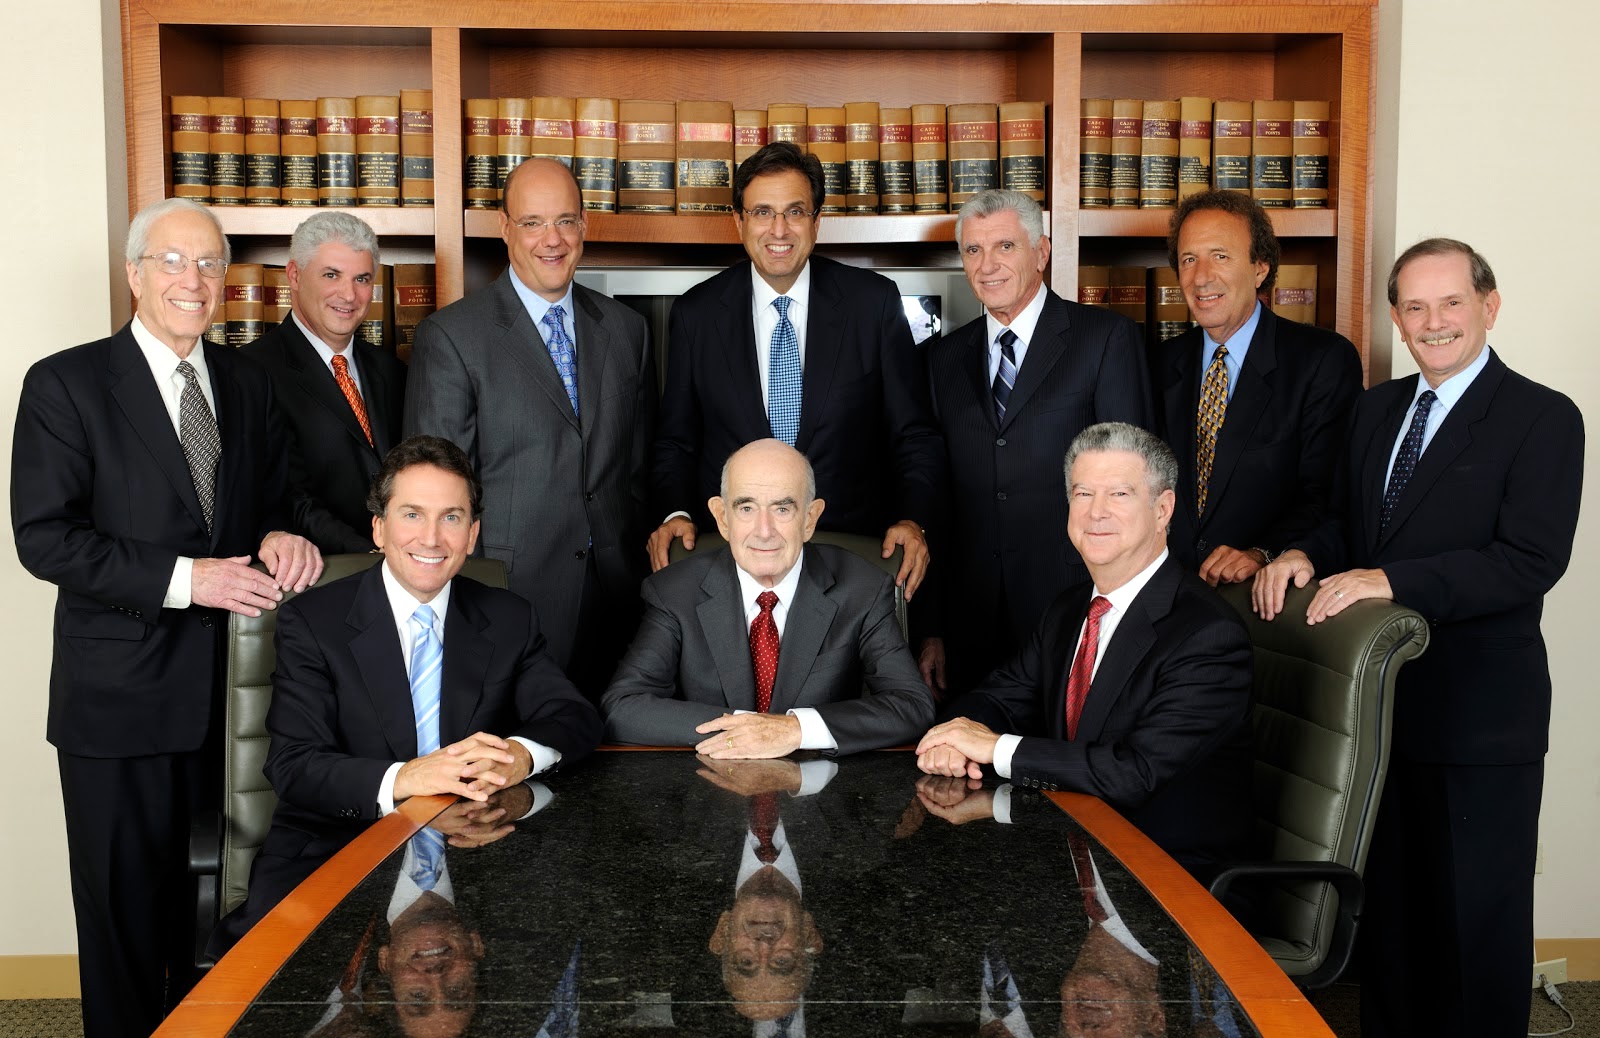 Photo of Gair, Gair, Conason, Rubinowitz, Bloom, Hershenhorn, Steigman & Mackauf in New York City, New York, United States - 1 Picture of Point of interest, Establishment, Lawyer